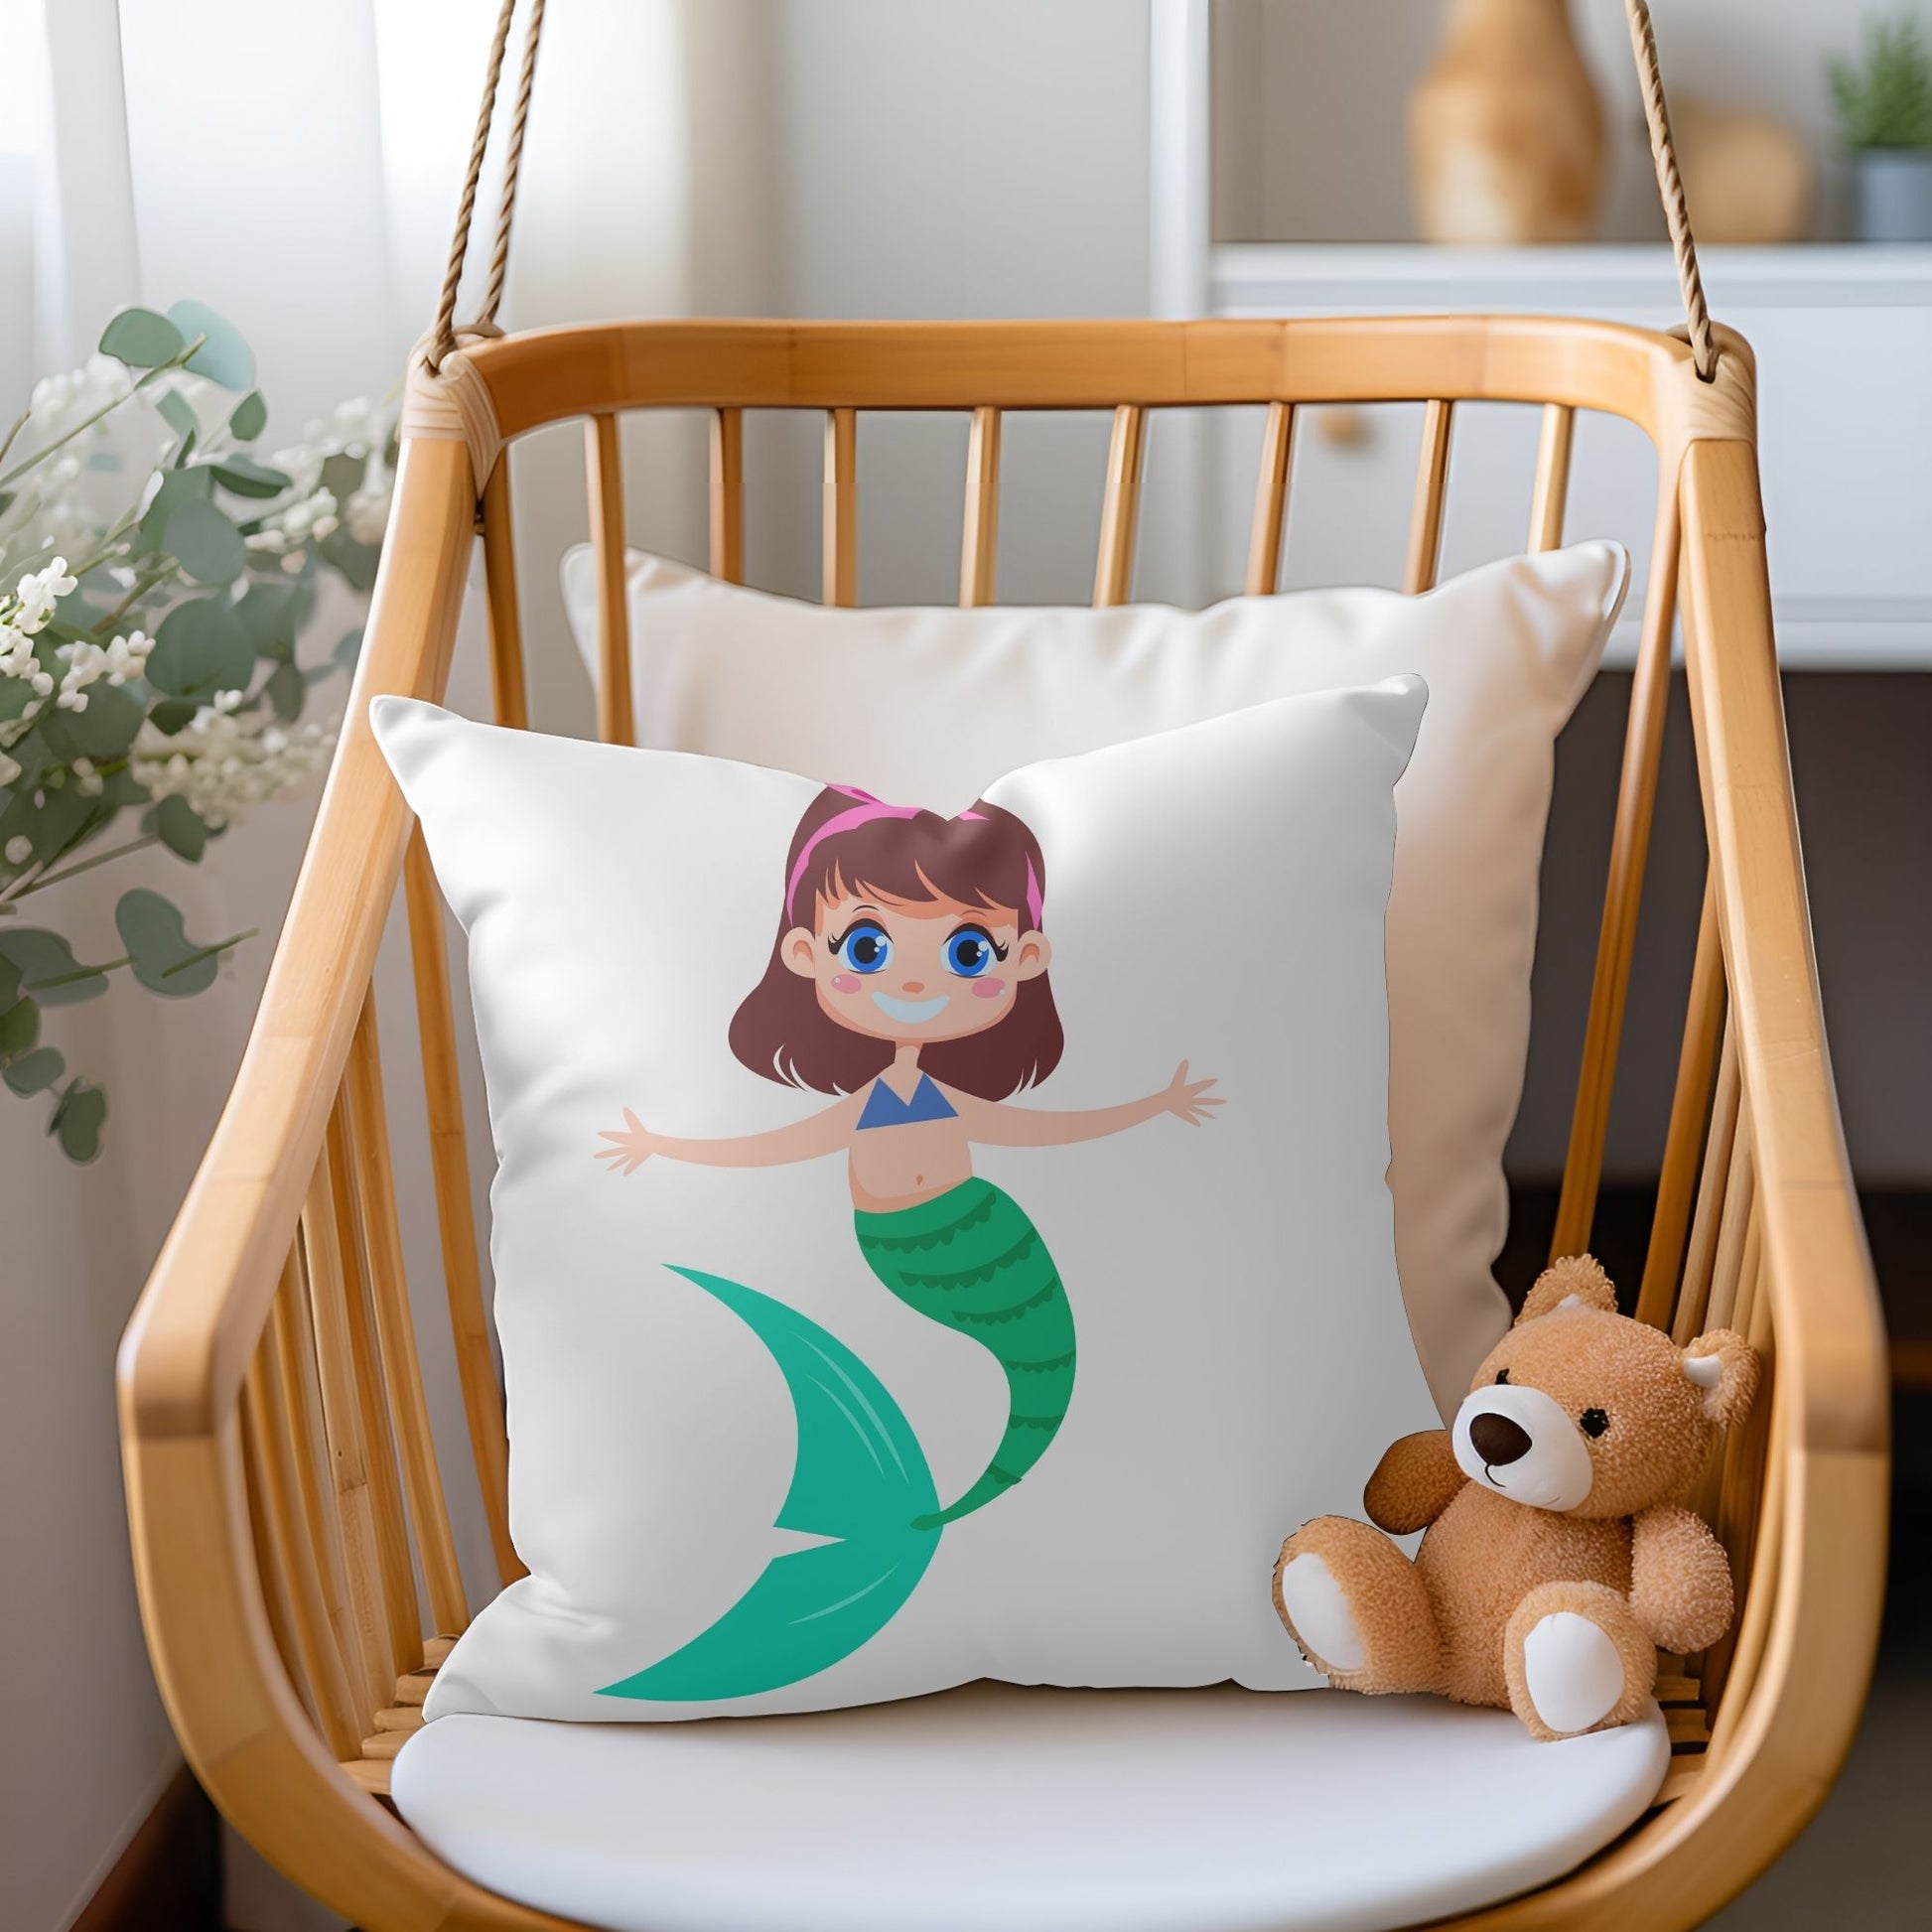 Decorative pillow for mermaid-themed girls' room decor.